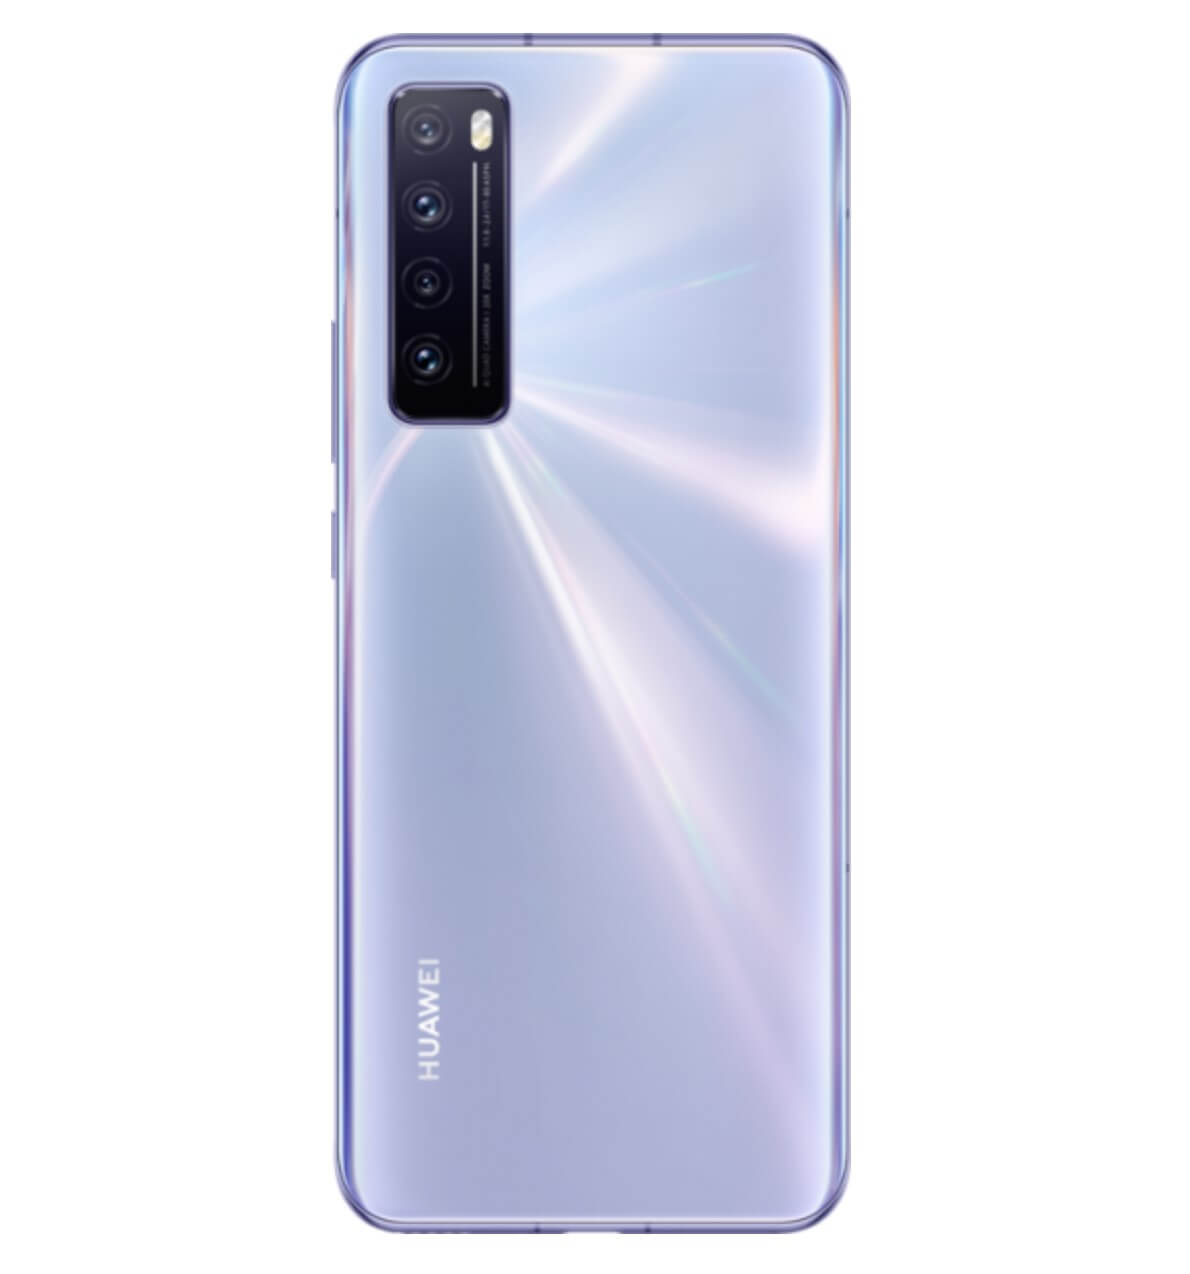 Huawei Nova 7